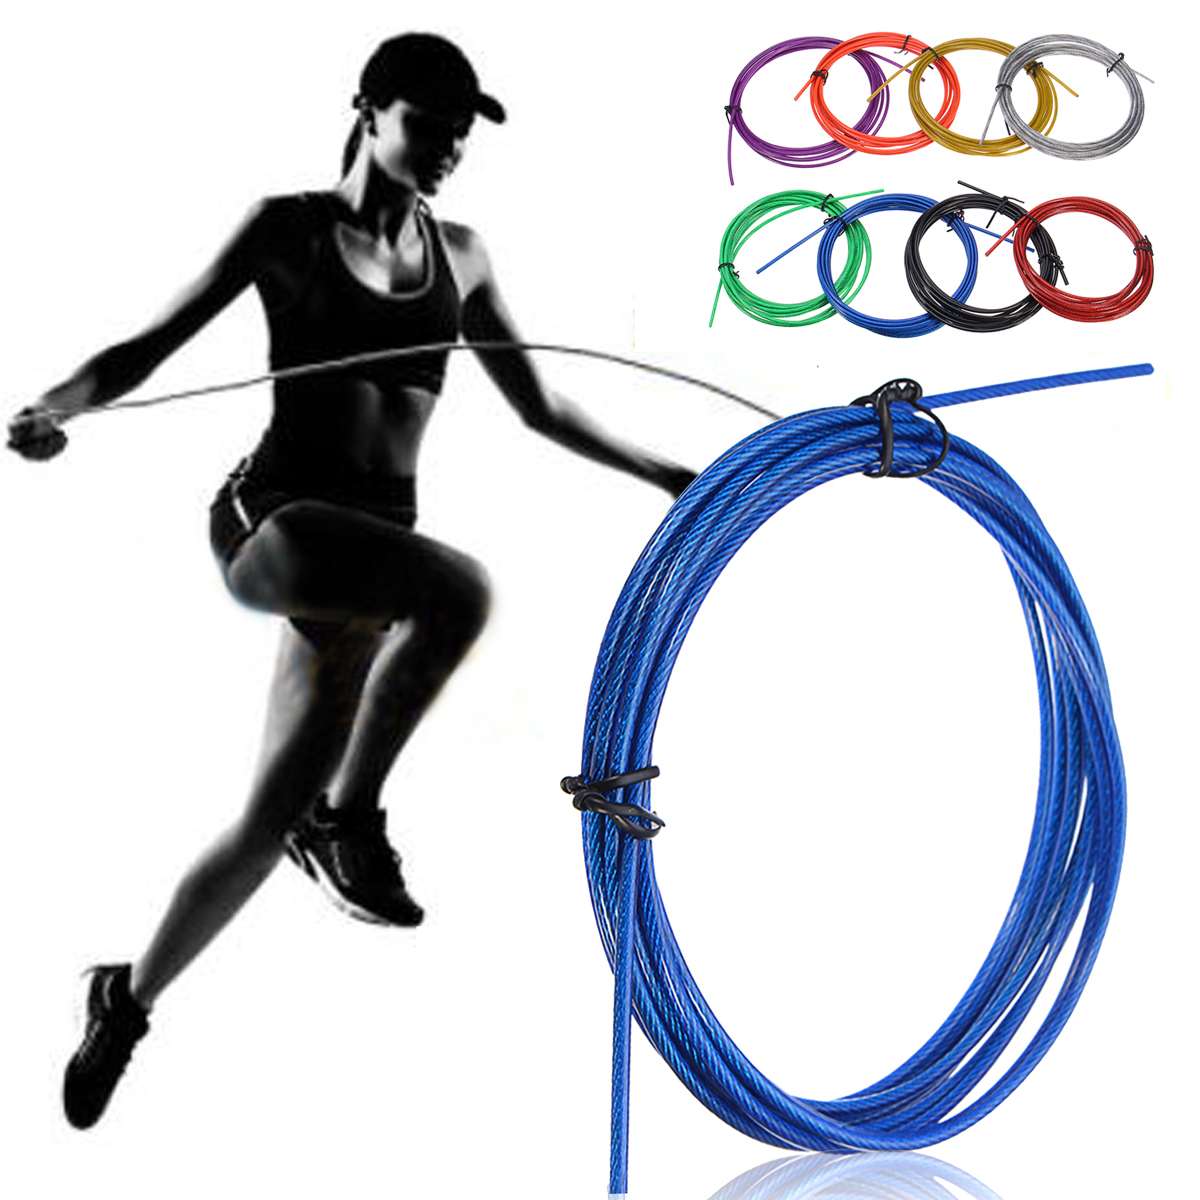 Staaldraad Voor Springtouwen 3M Spare Crossfit Fitness Touw Vervangbare Draad Kabel Metal Speed Jump Rope Skipping Rope